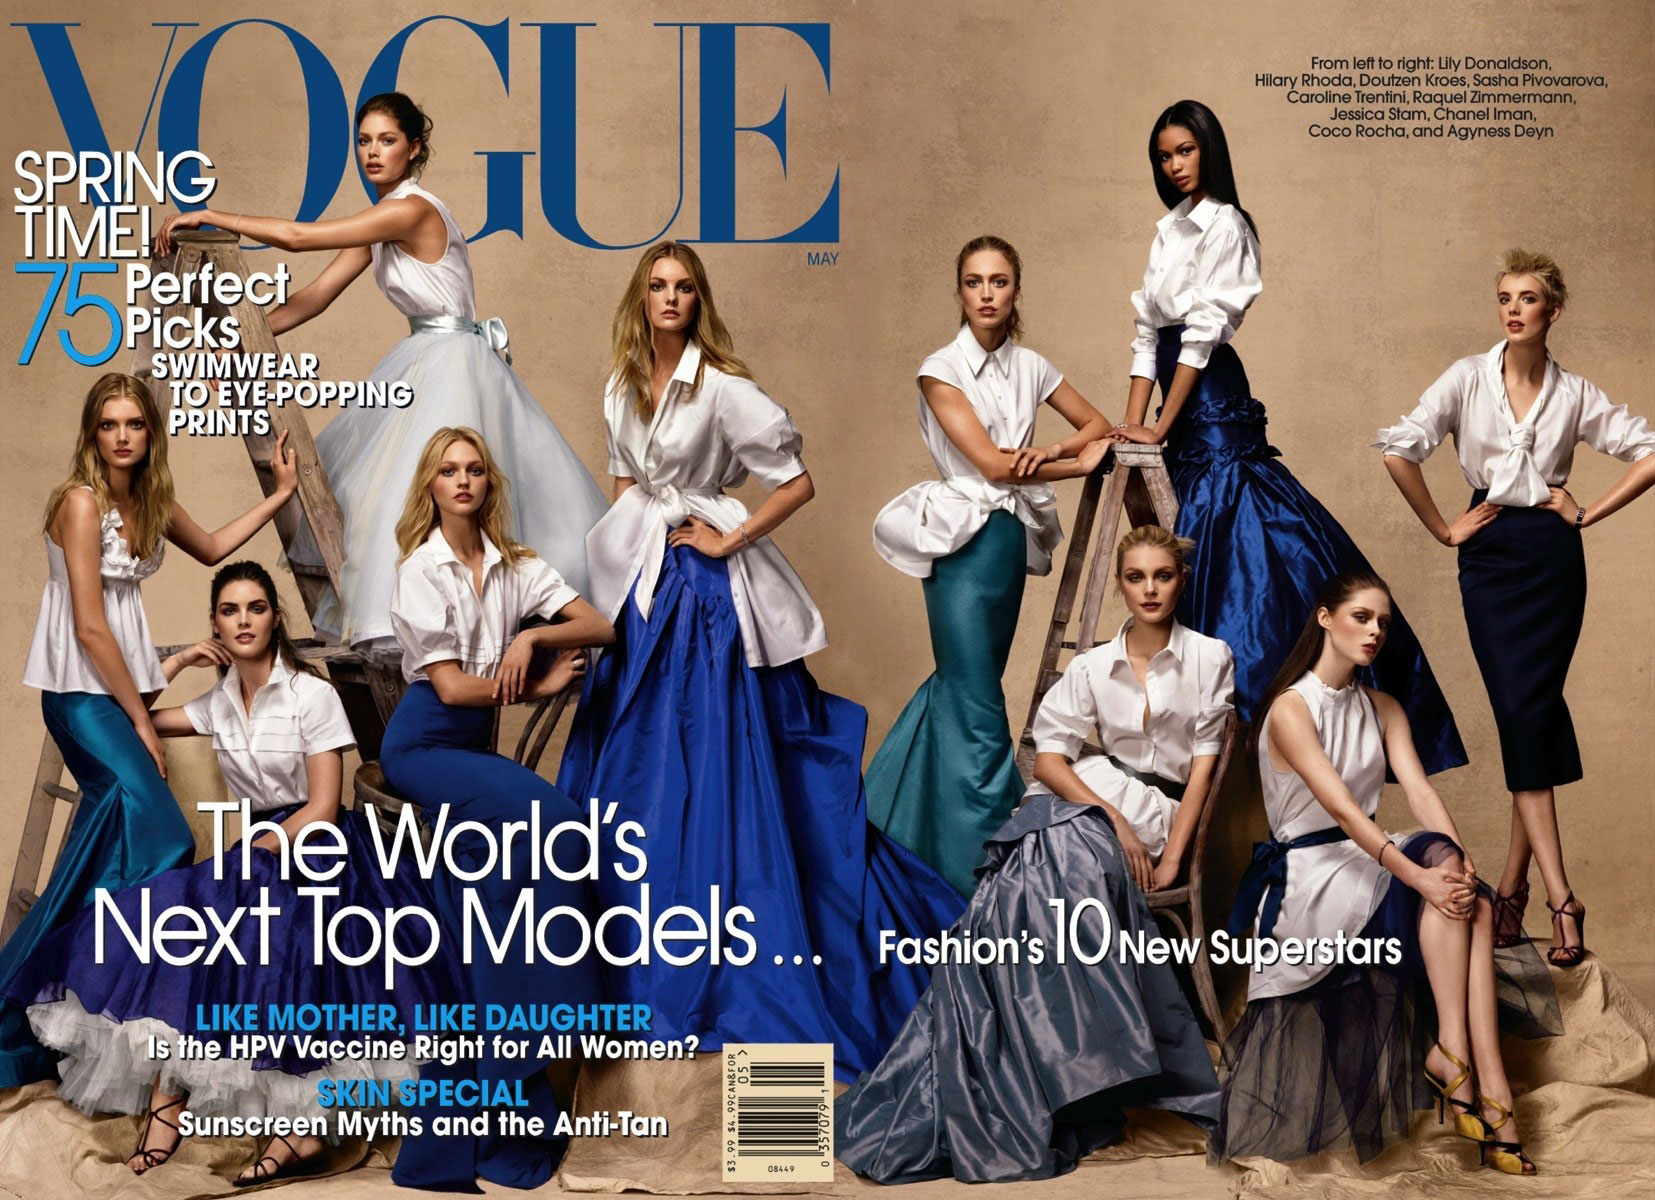 Vogue Magazine next top models 2007